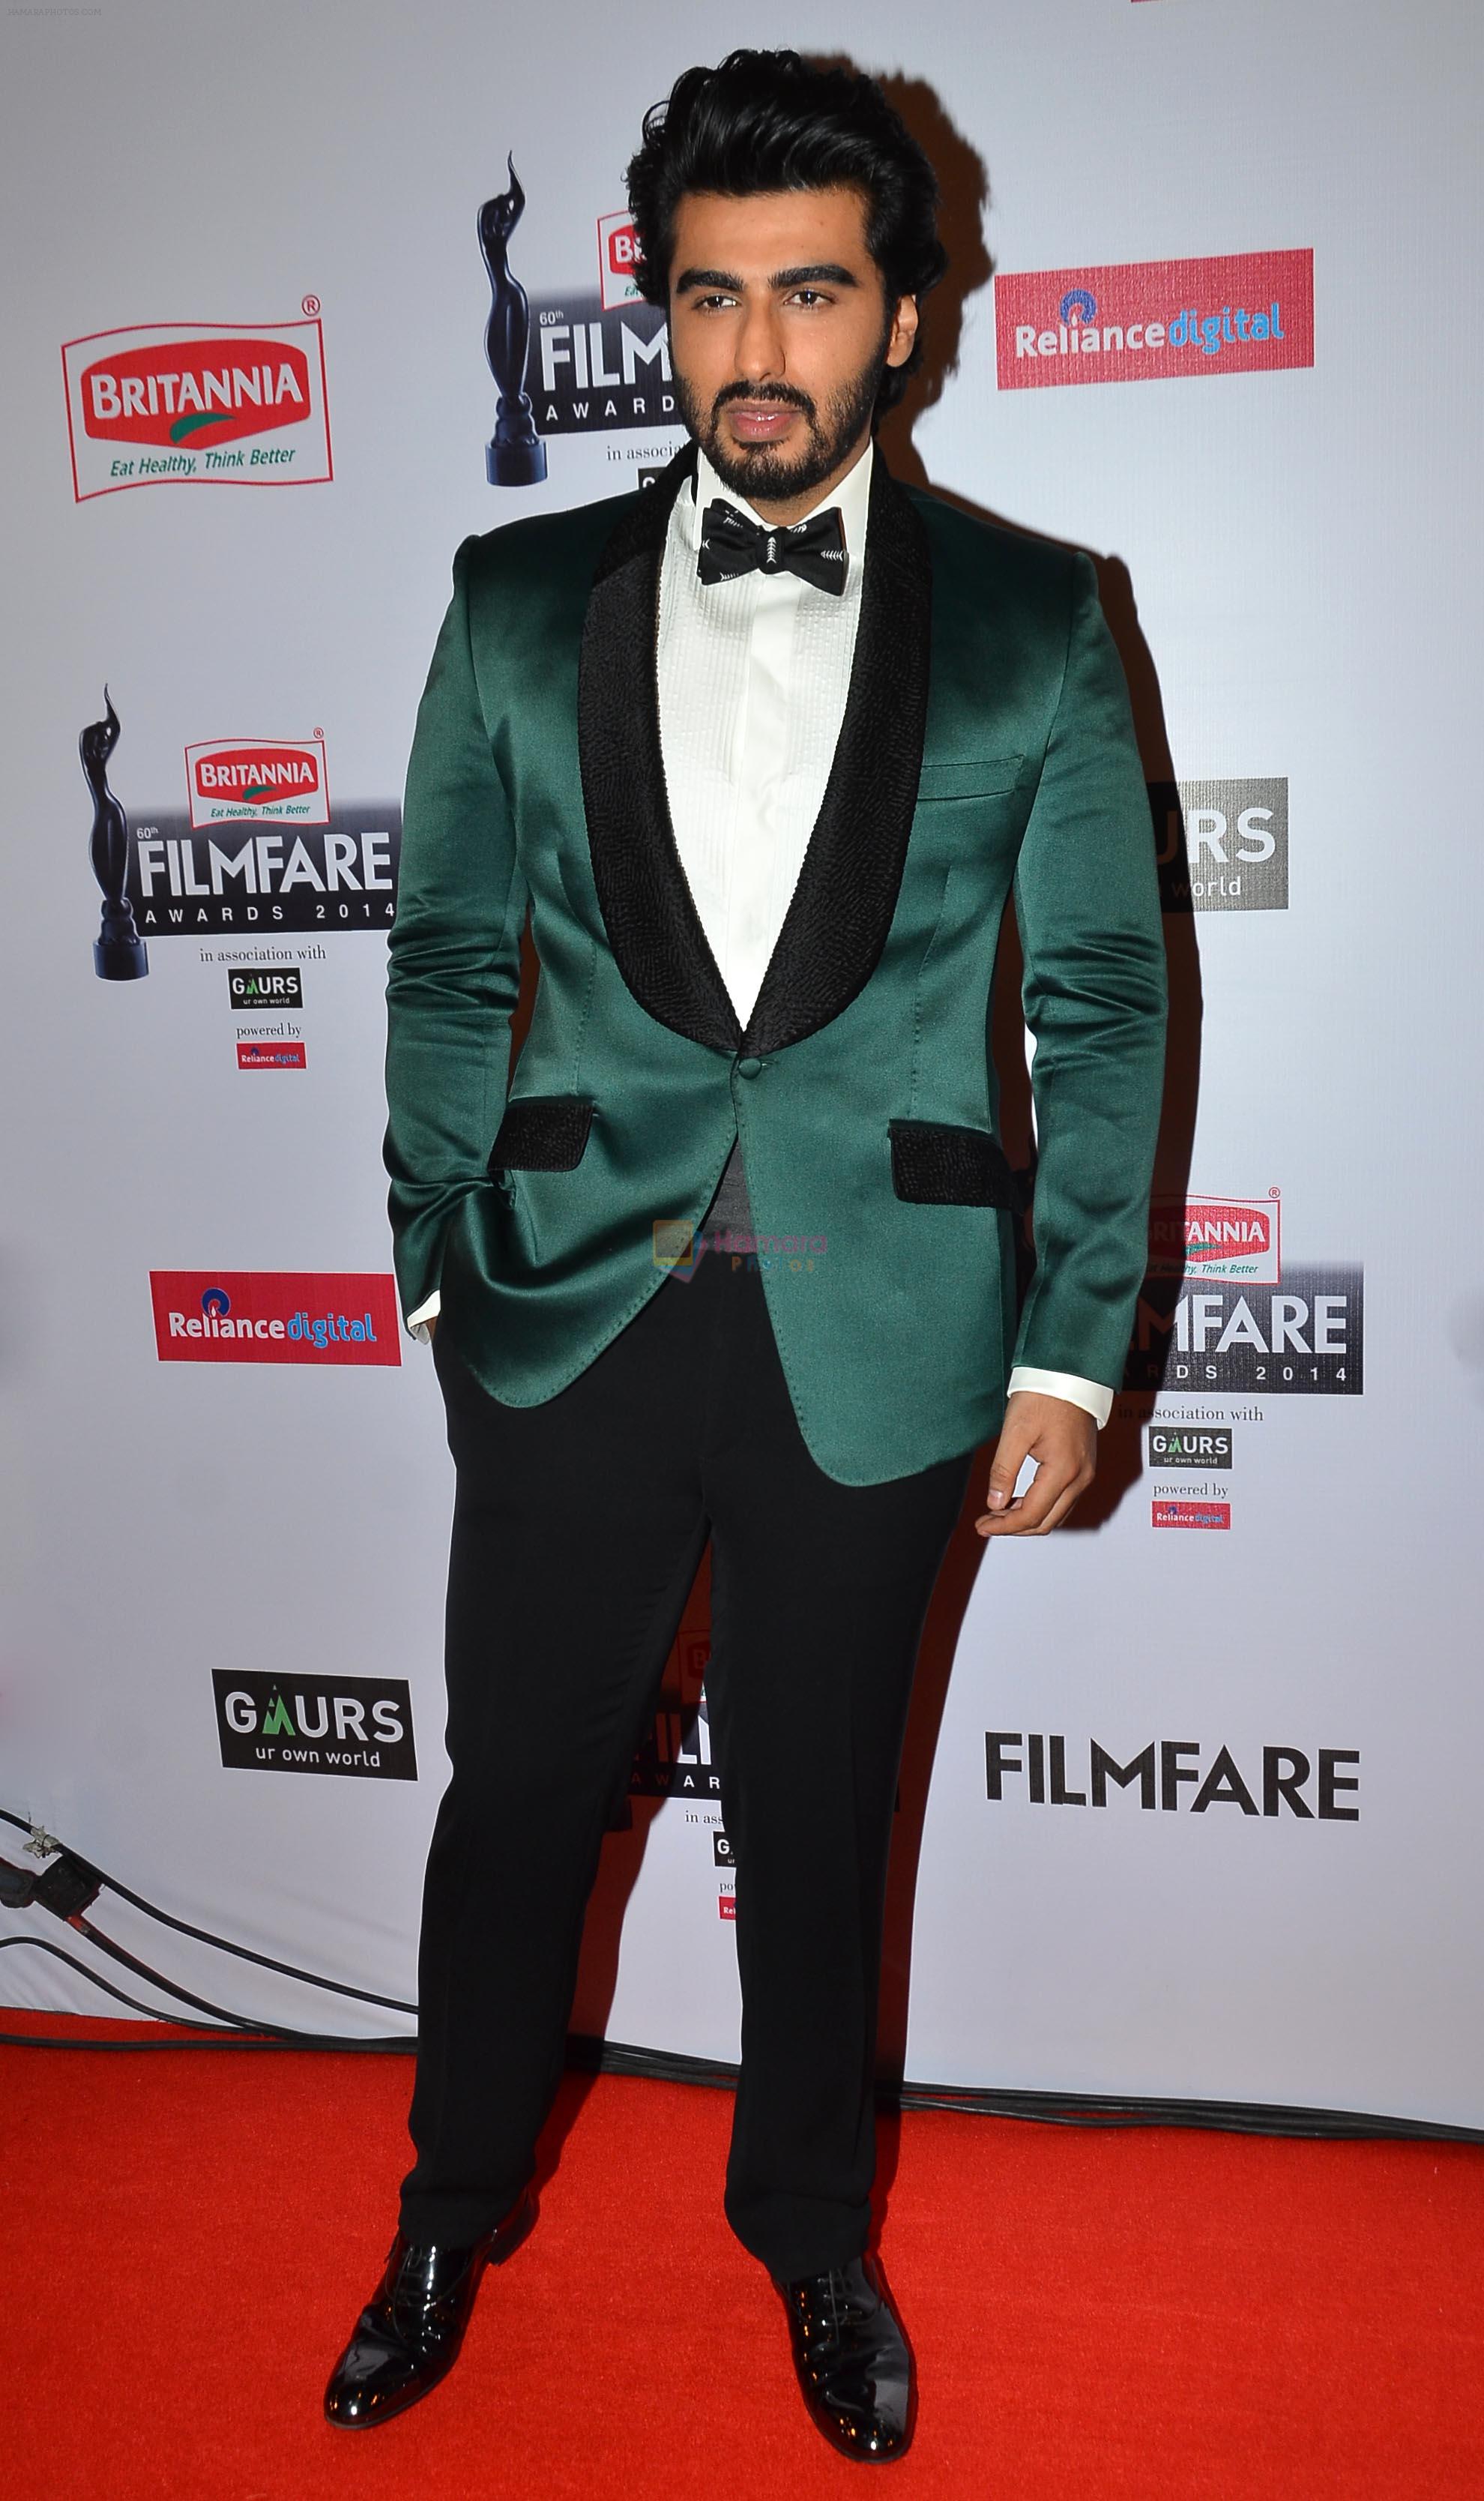 Arjun Kapoor graces the red carpet at the 60th Britannia Filmfare Awards